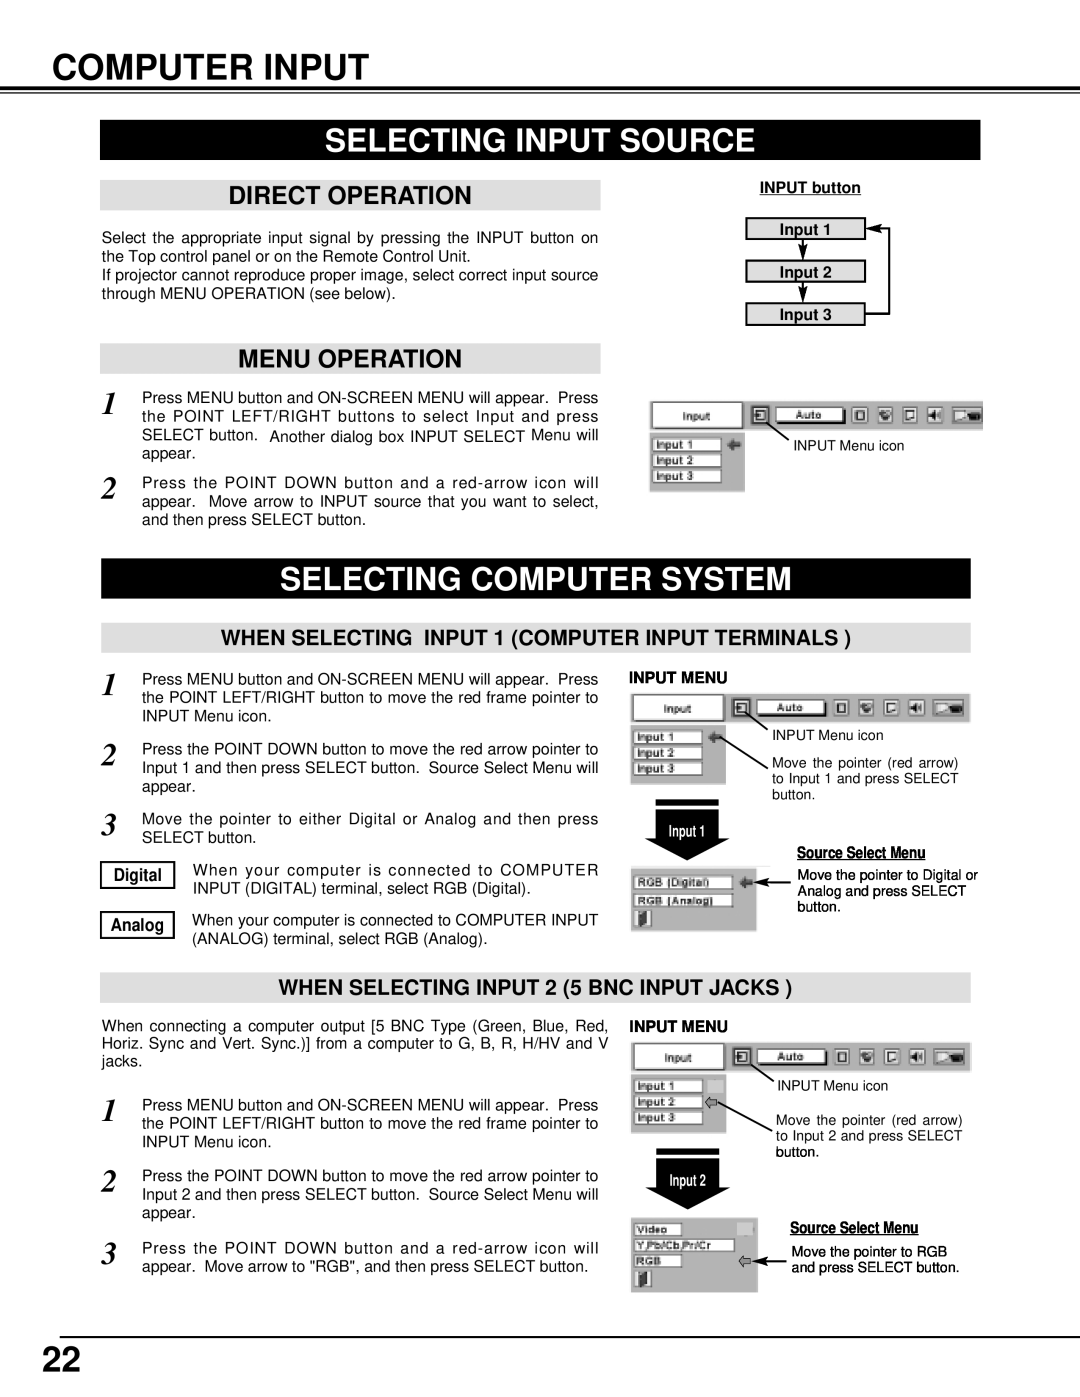 Christie Digital Systems 38-VIV205-01 Computer Input, Selecting Input Source, Selecting Computer System, Direct Operation 